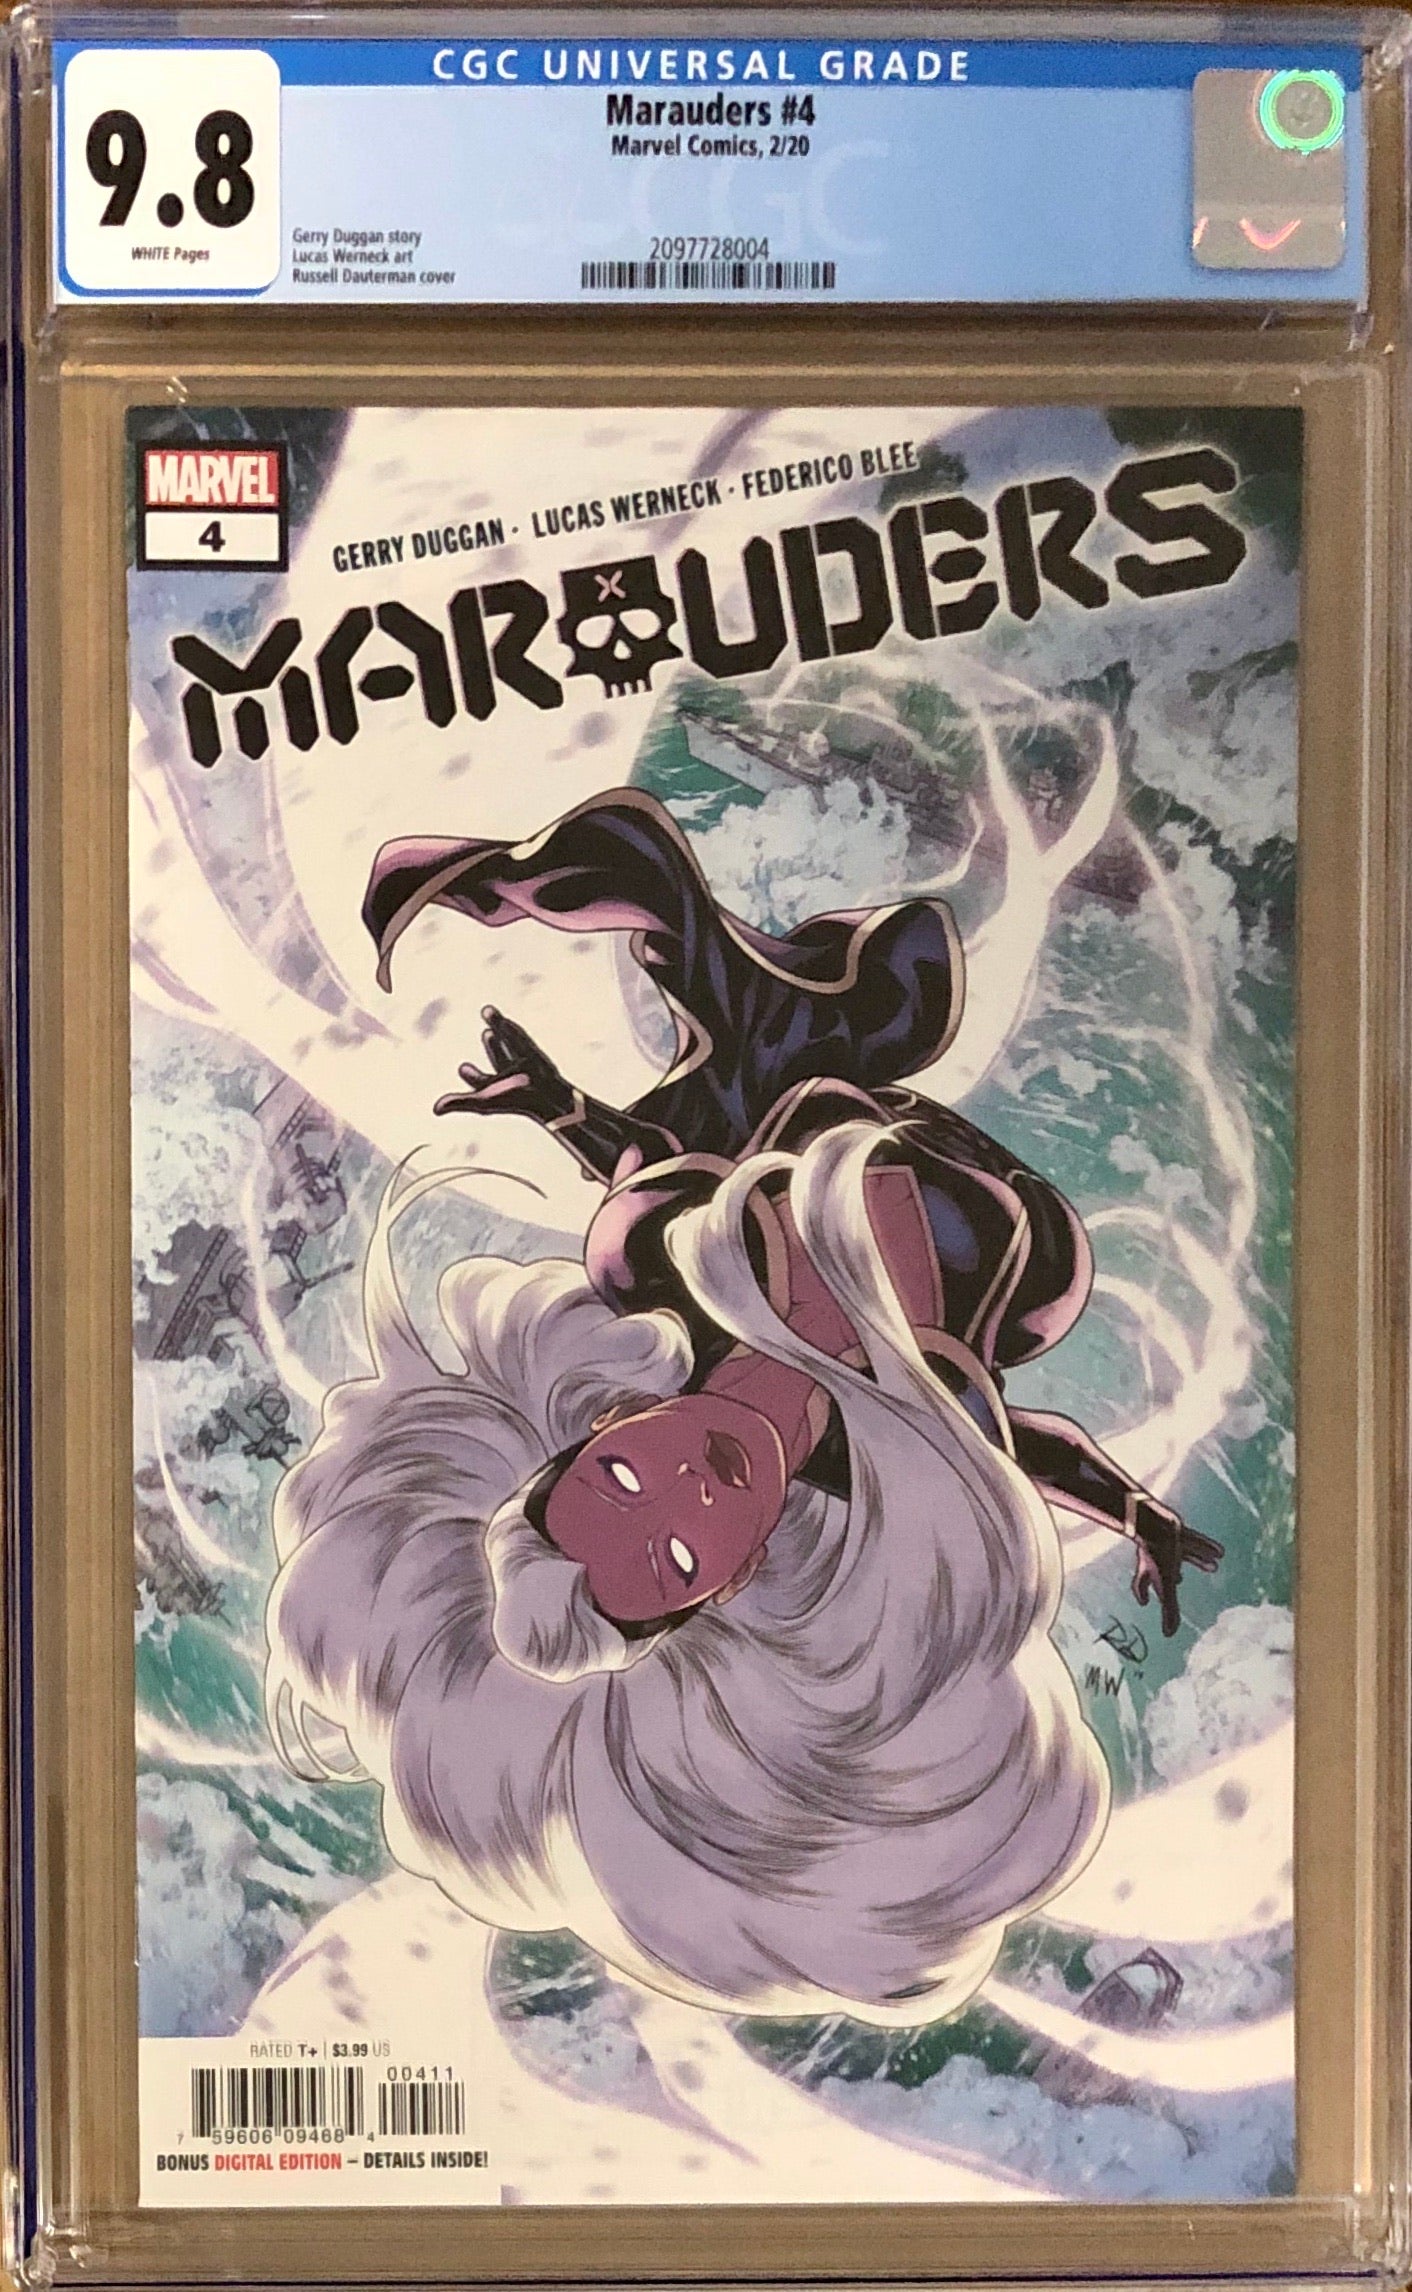 Marauders #4 CGC 9.8 - Dawn of X!